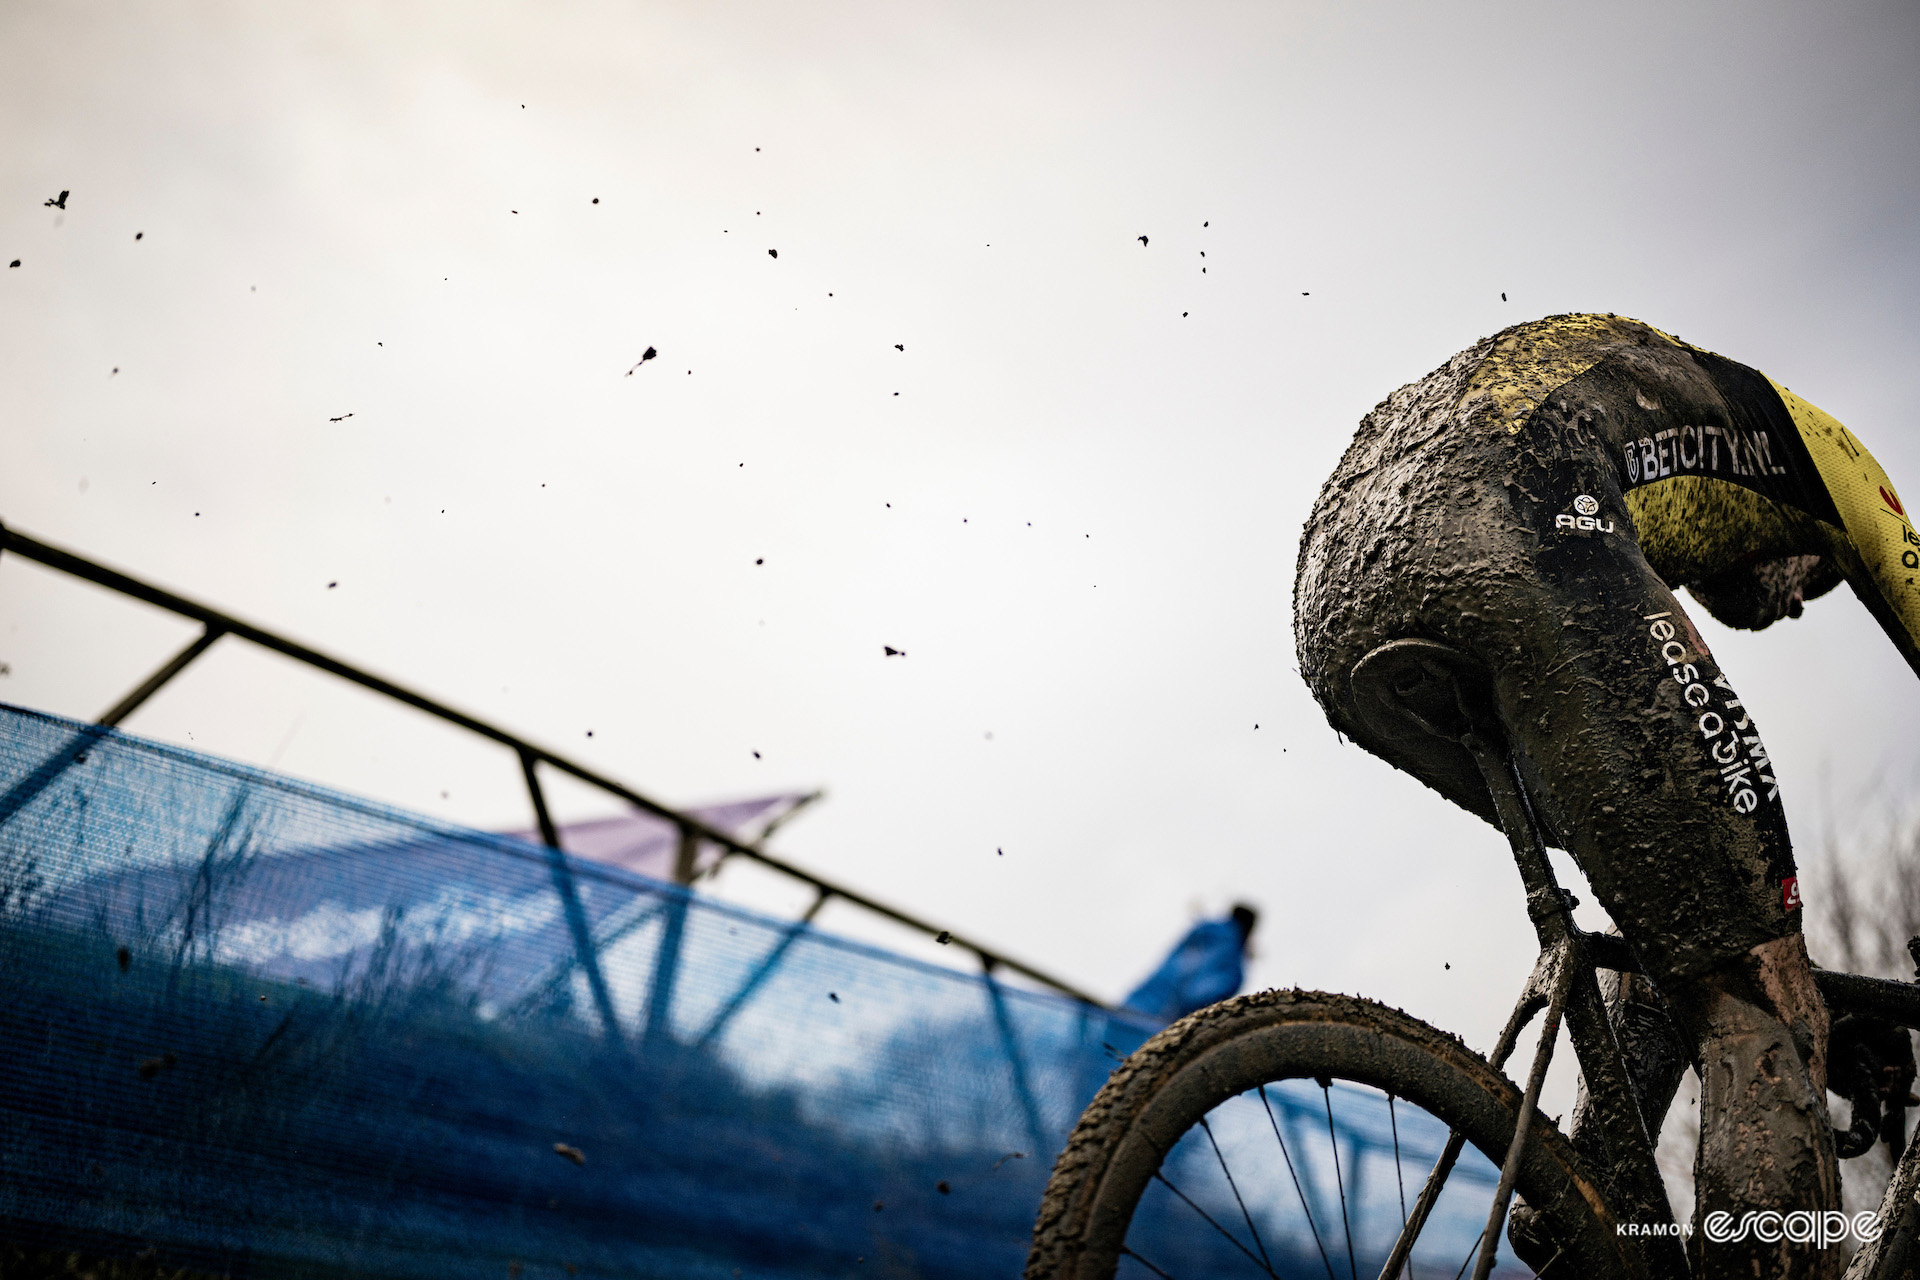 A mud-covered Wout van Aert kicks up dirt during GP Sven Nys.